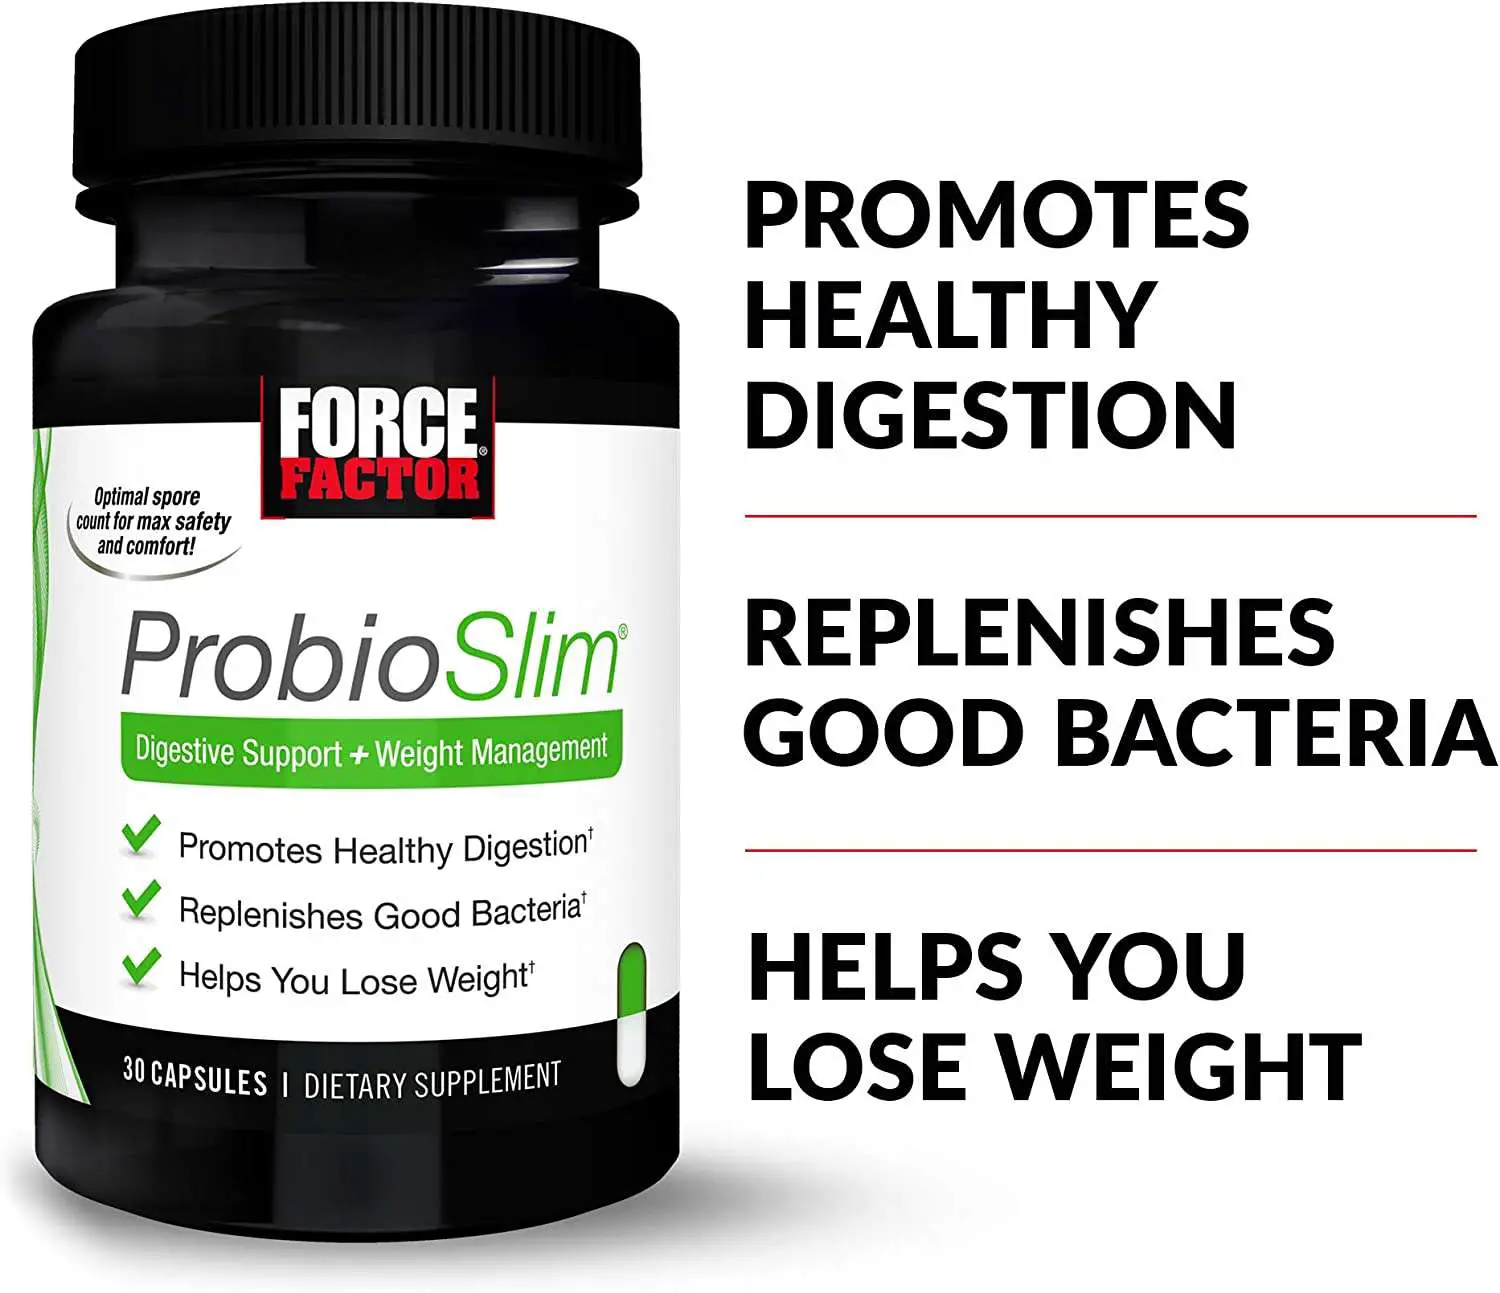 Force Factor Probioslim Probiotics + Weight Loss ...